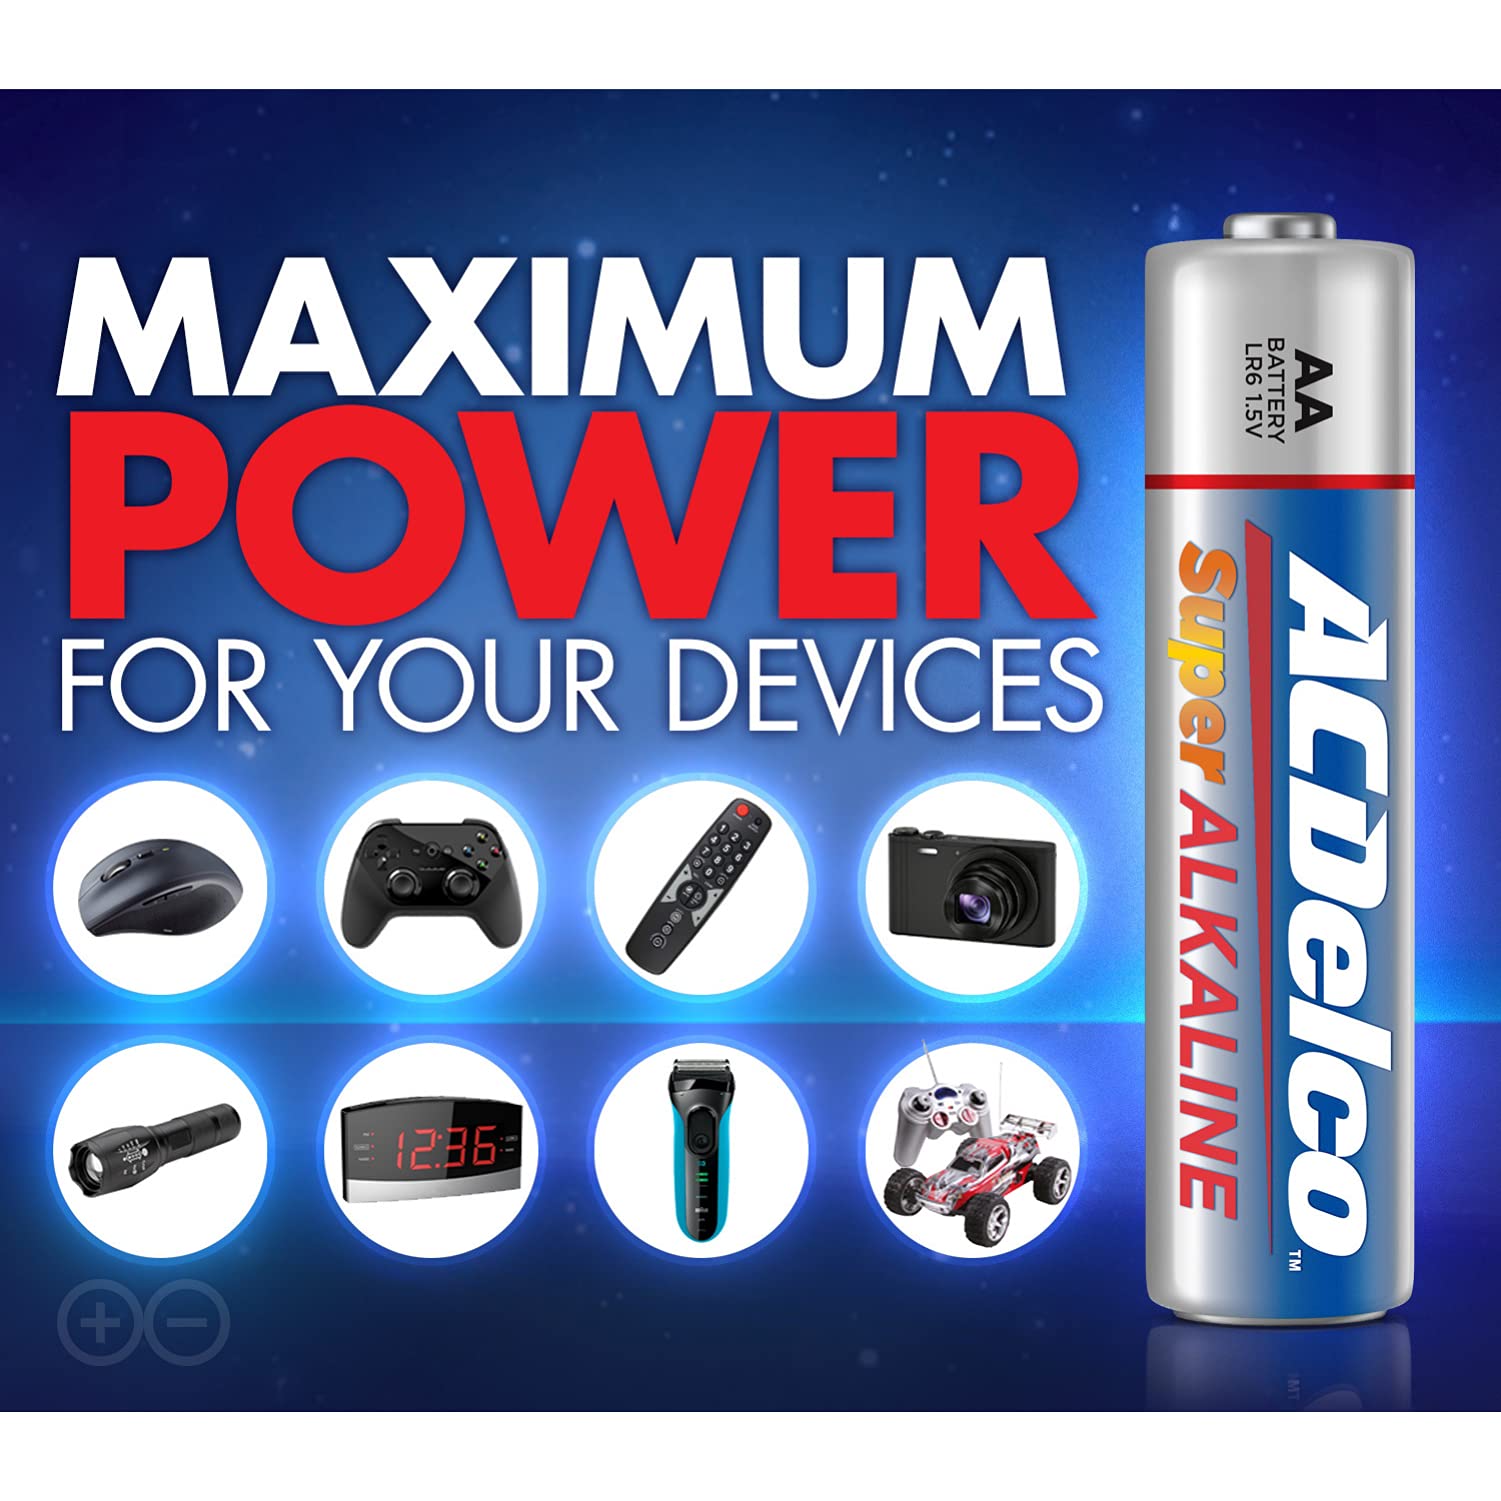 ACDelco 48-Count AA Batteries, Maximum Power Super Alkaline Battery, 10-Year Shelf Life, Recloseable Packaging